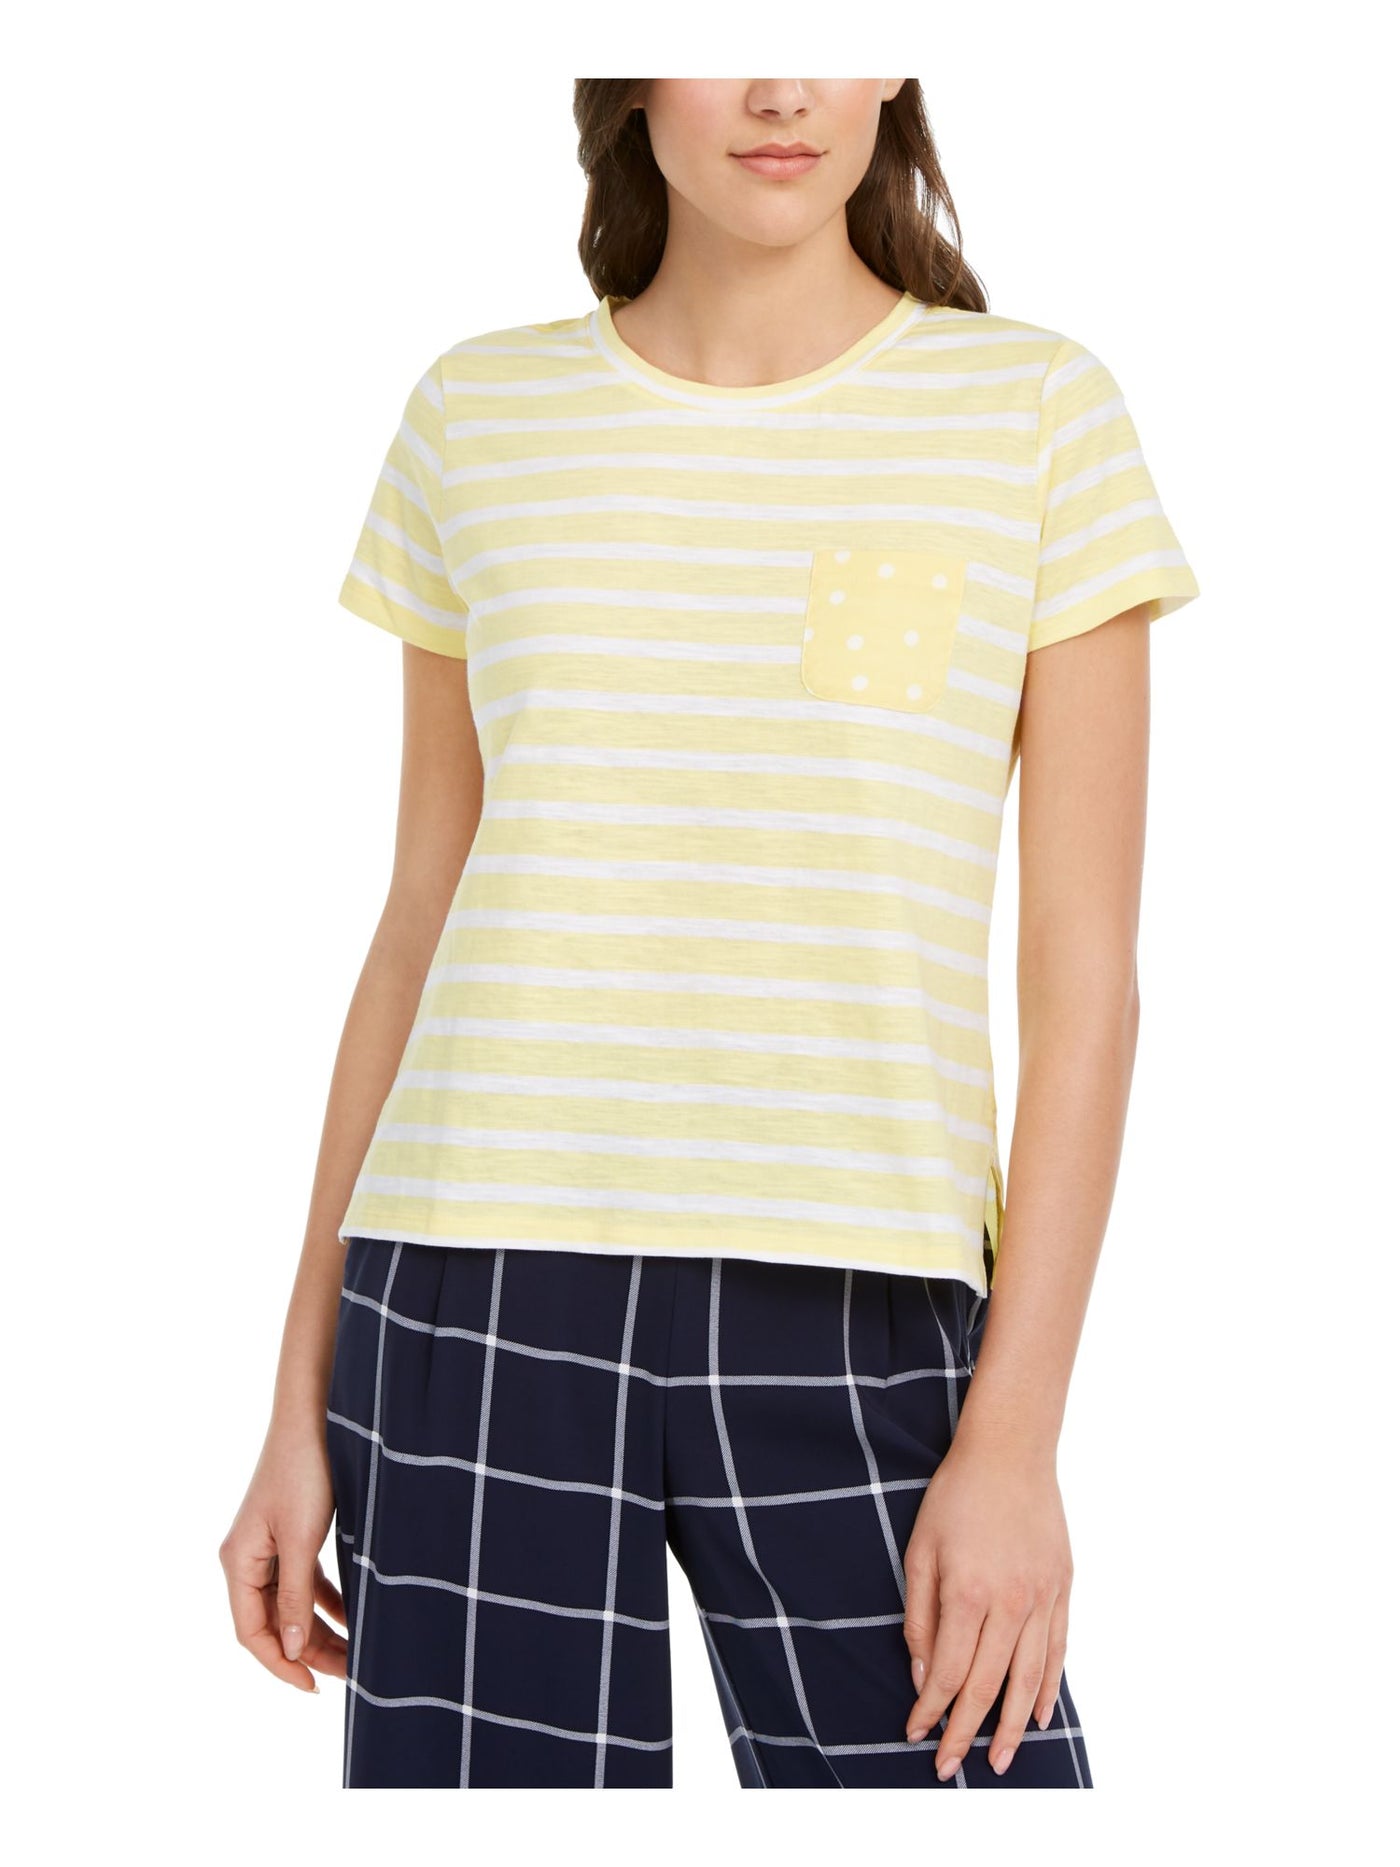 MAISON JULES Womens Yellow Striped Short Sleeve Top Size: XXS